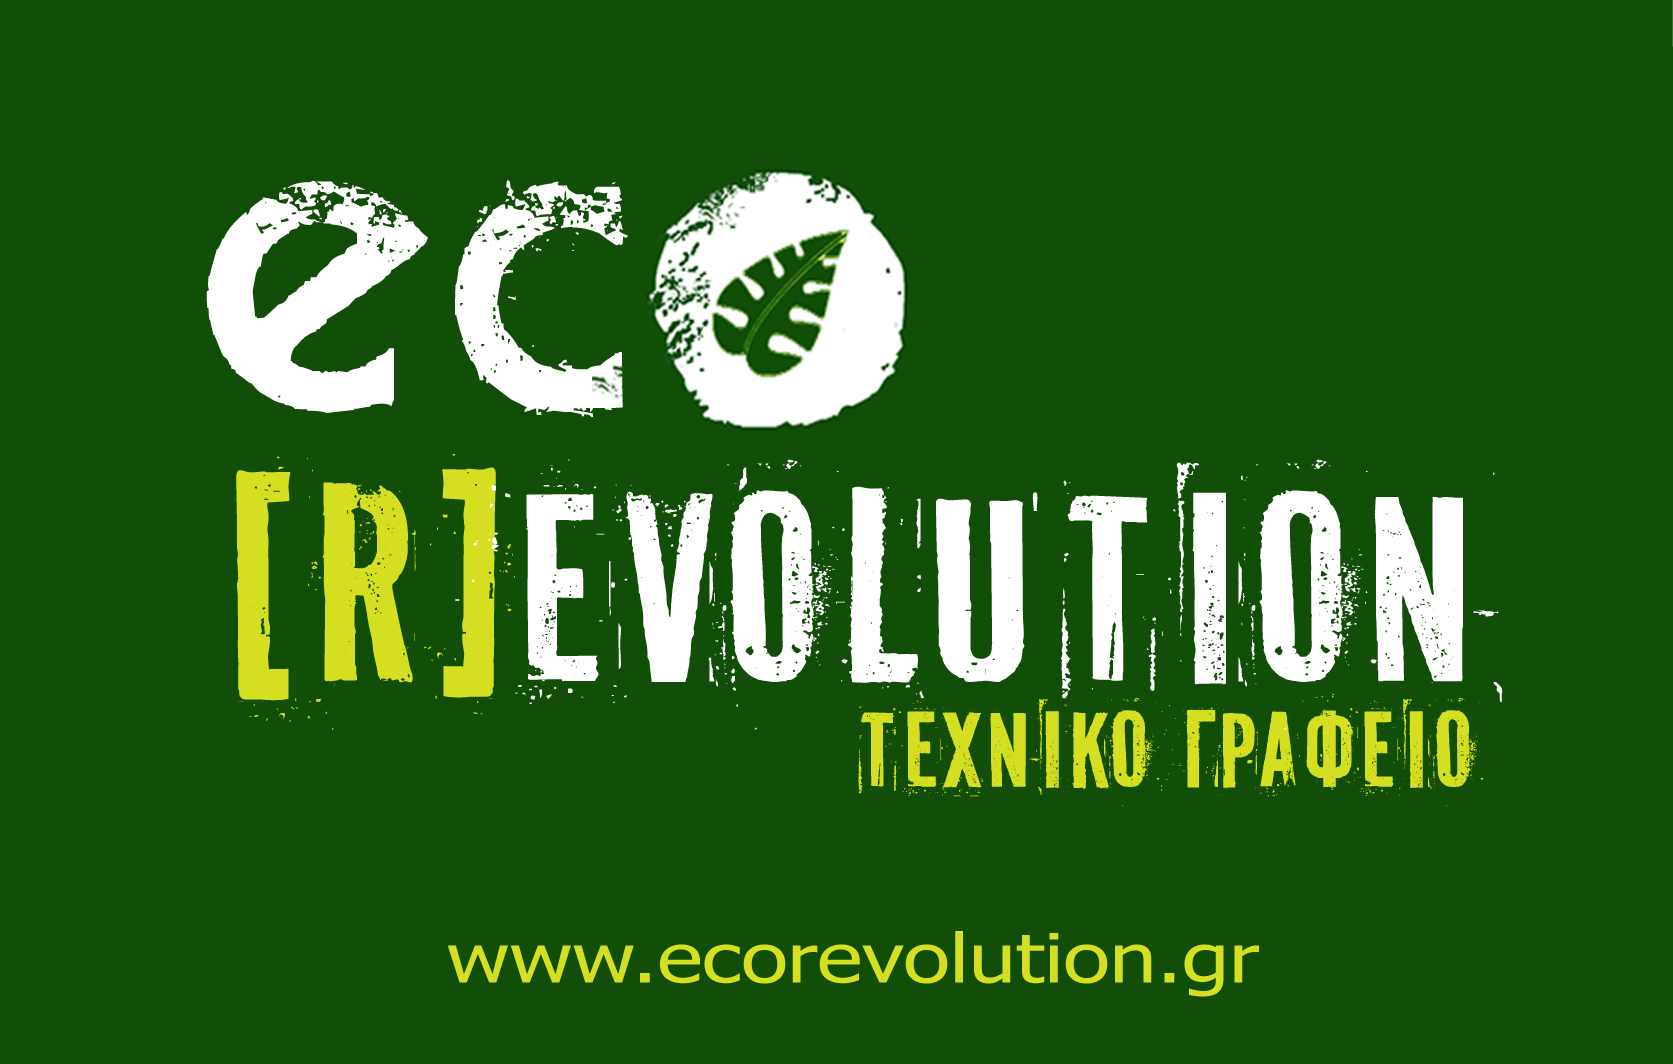 Eco [R]evolution